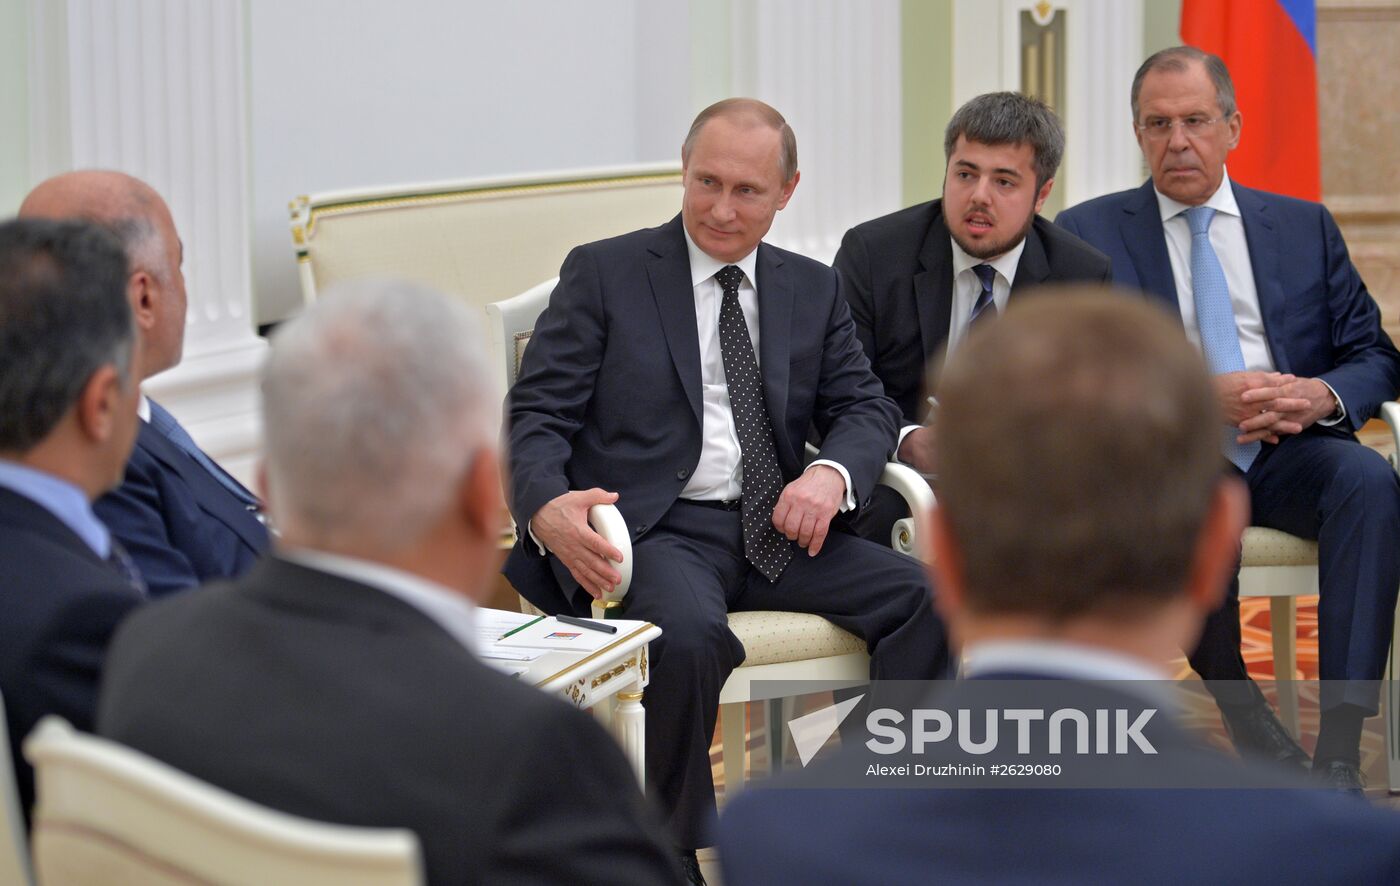 Russian President Vladimir Putin meets with Iraqi Prime Minister Haider Al-Abadi